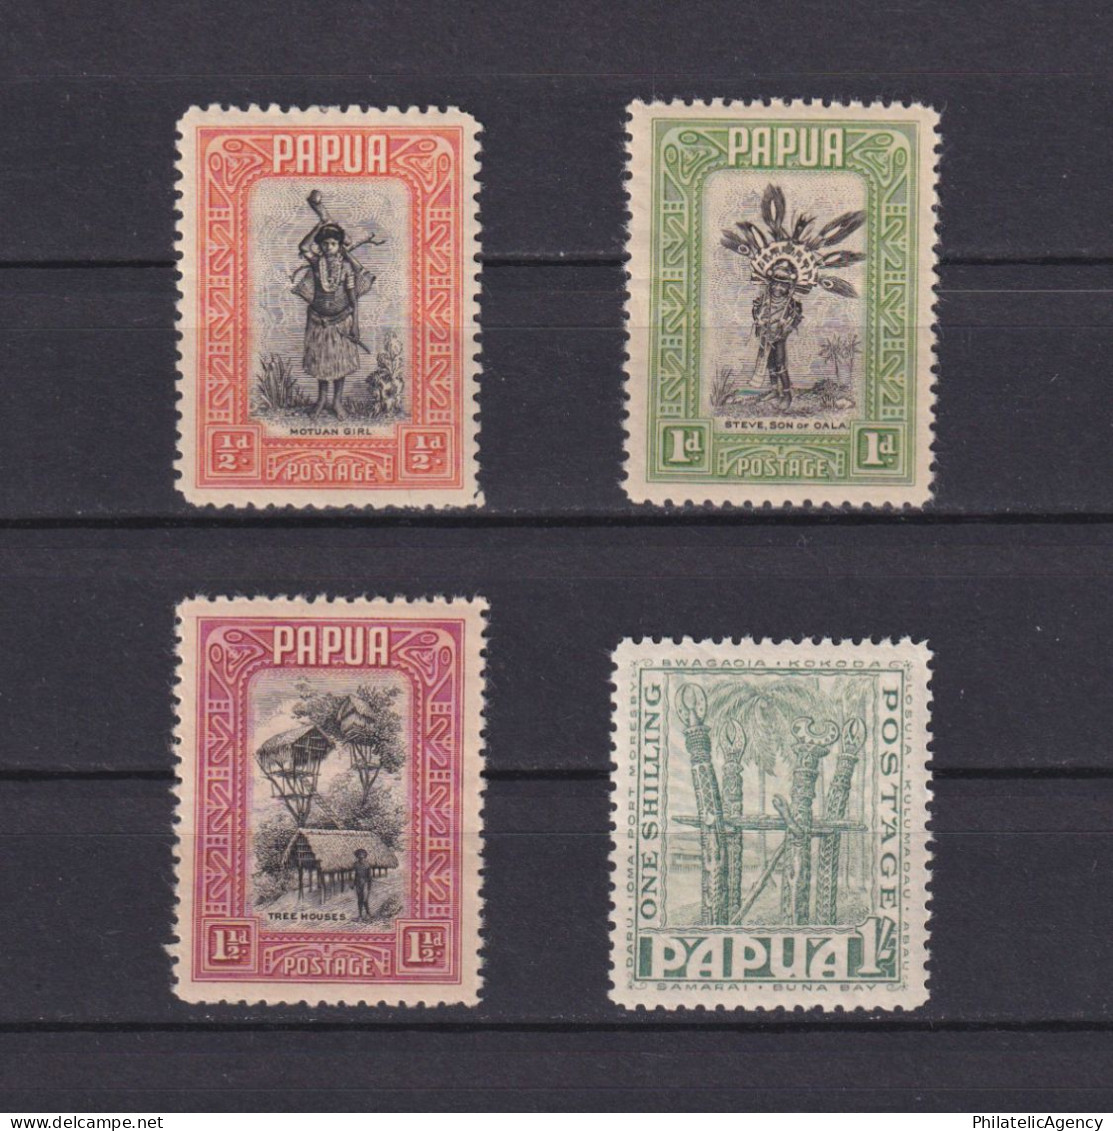 PAPUA 1932, SG #130-139, CV £22, Part Set, MH - Papua New Guinea